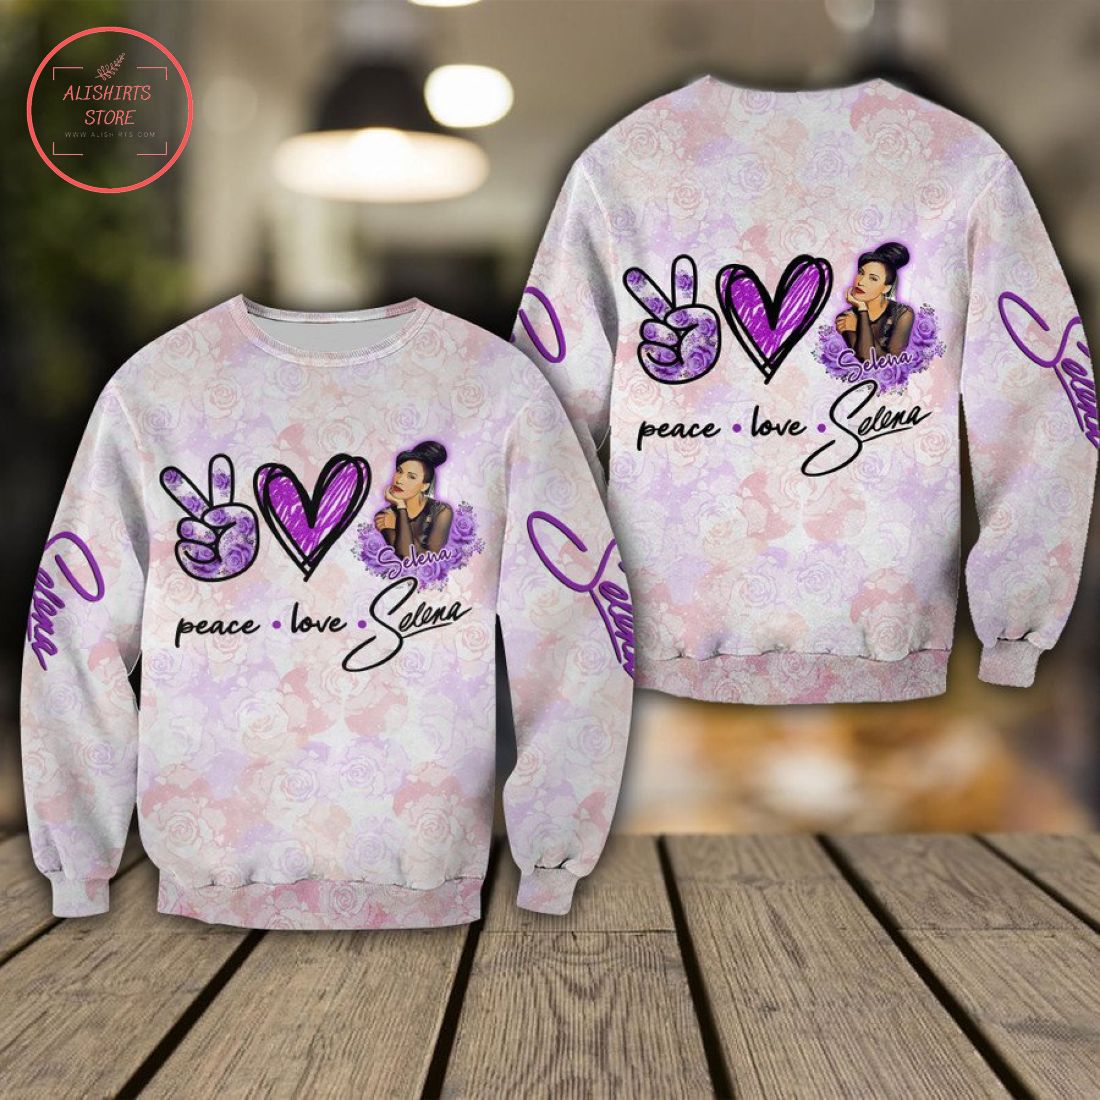 Peace Love Selena Quintanilla all-over printed shirt